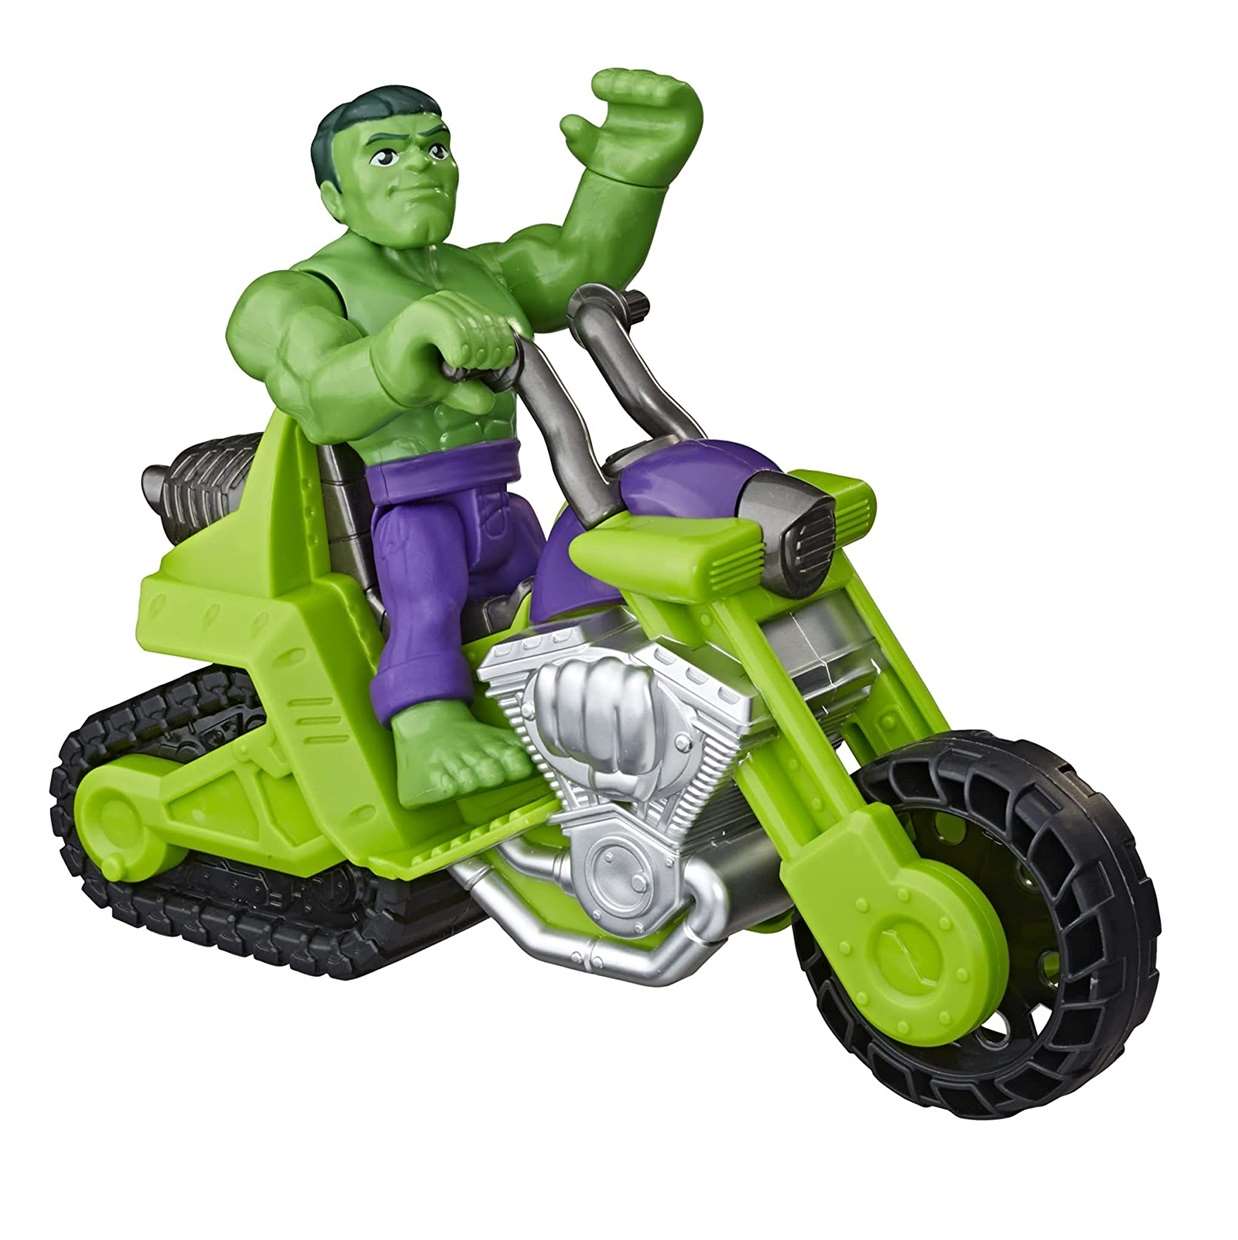 Hulk Smash Tank Figura Marvel Super Hero Adventures 4 PuLG